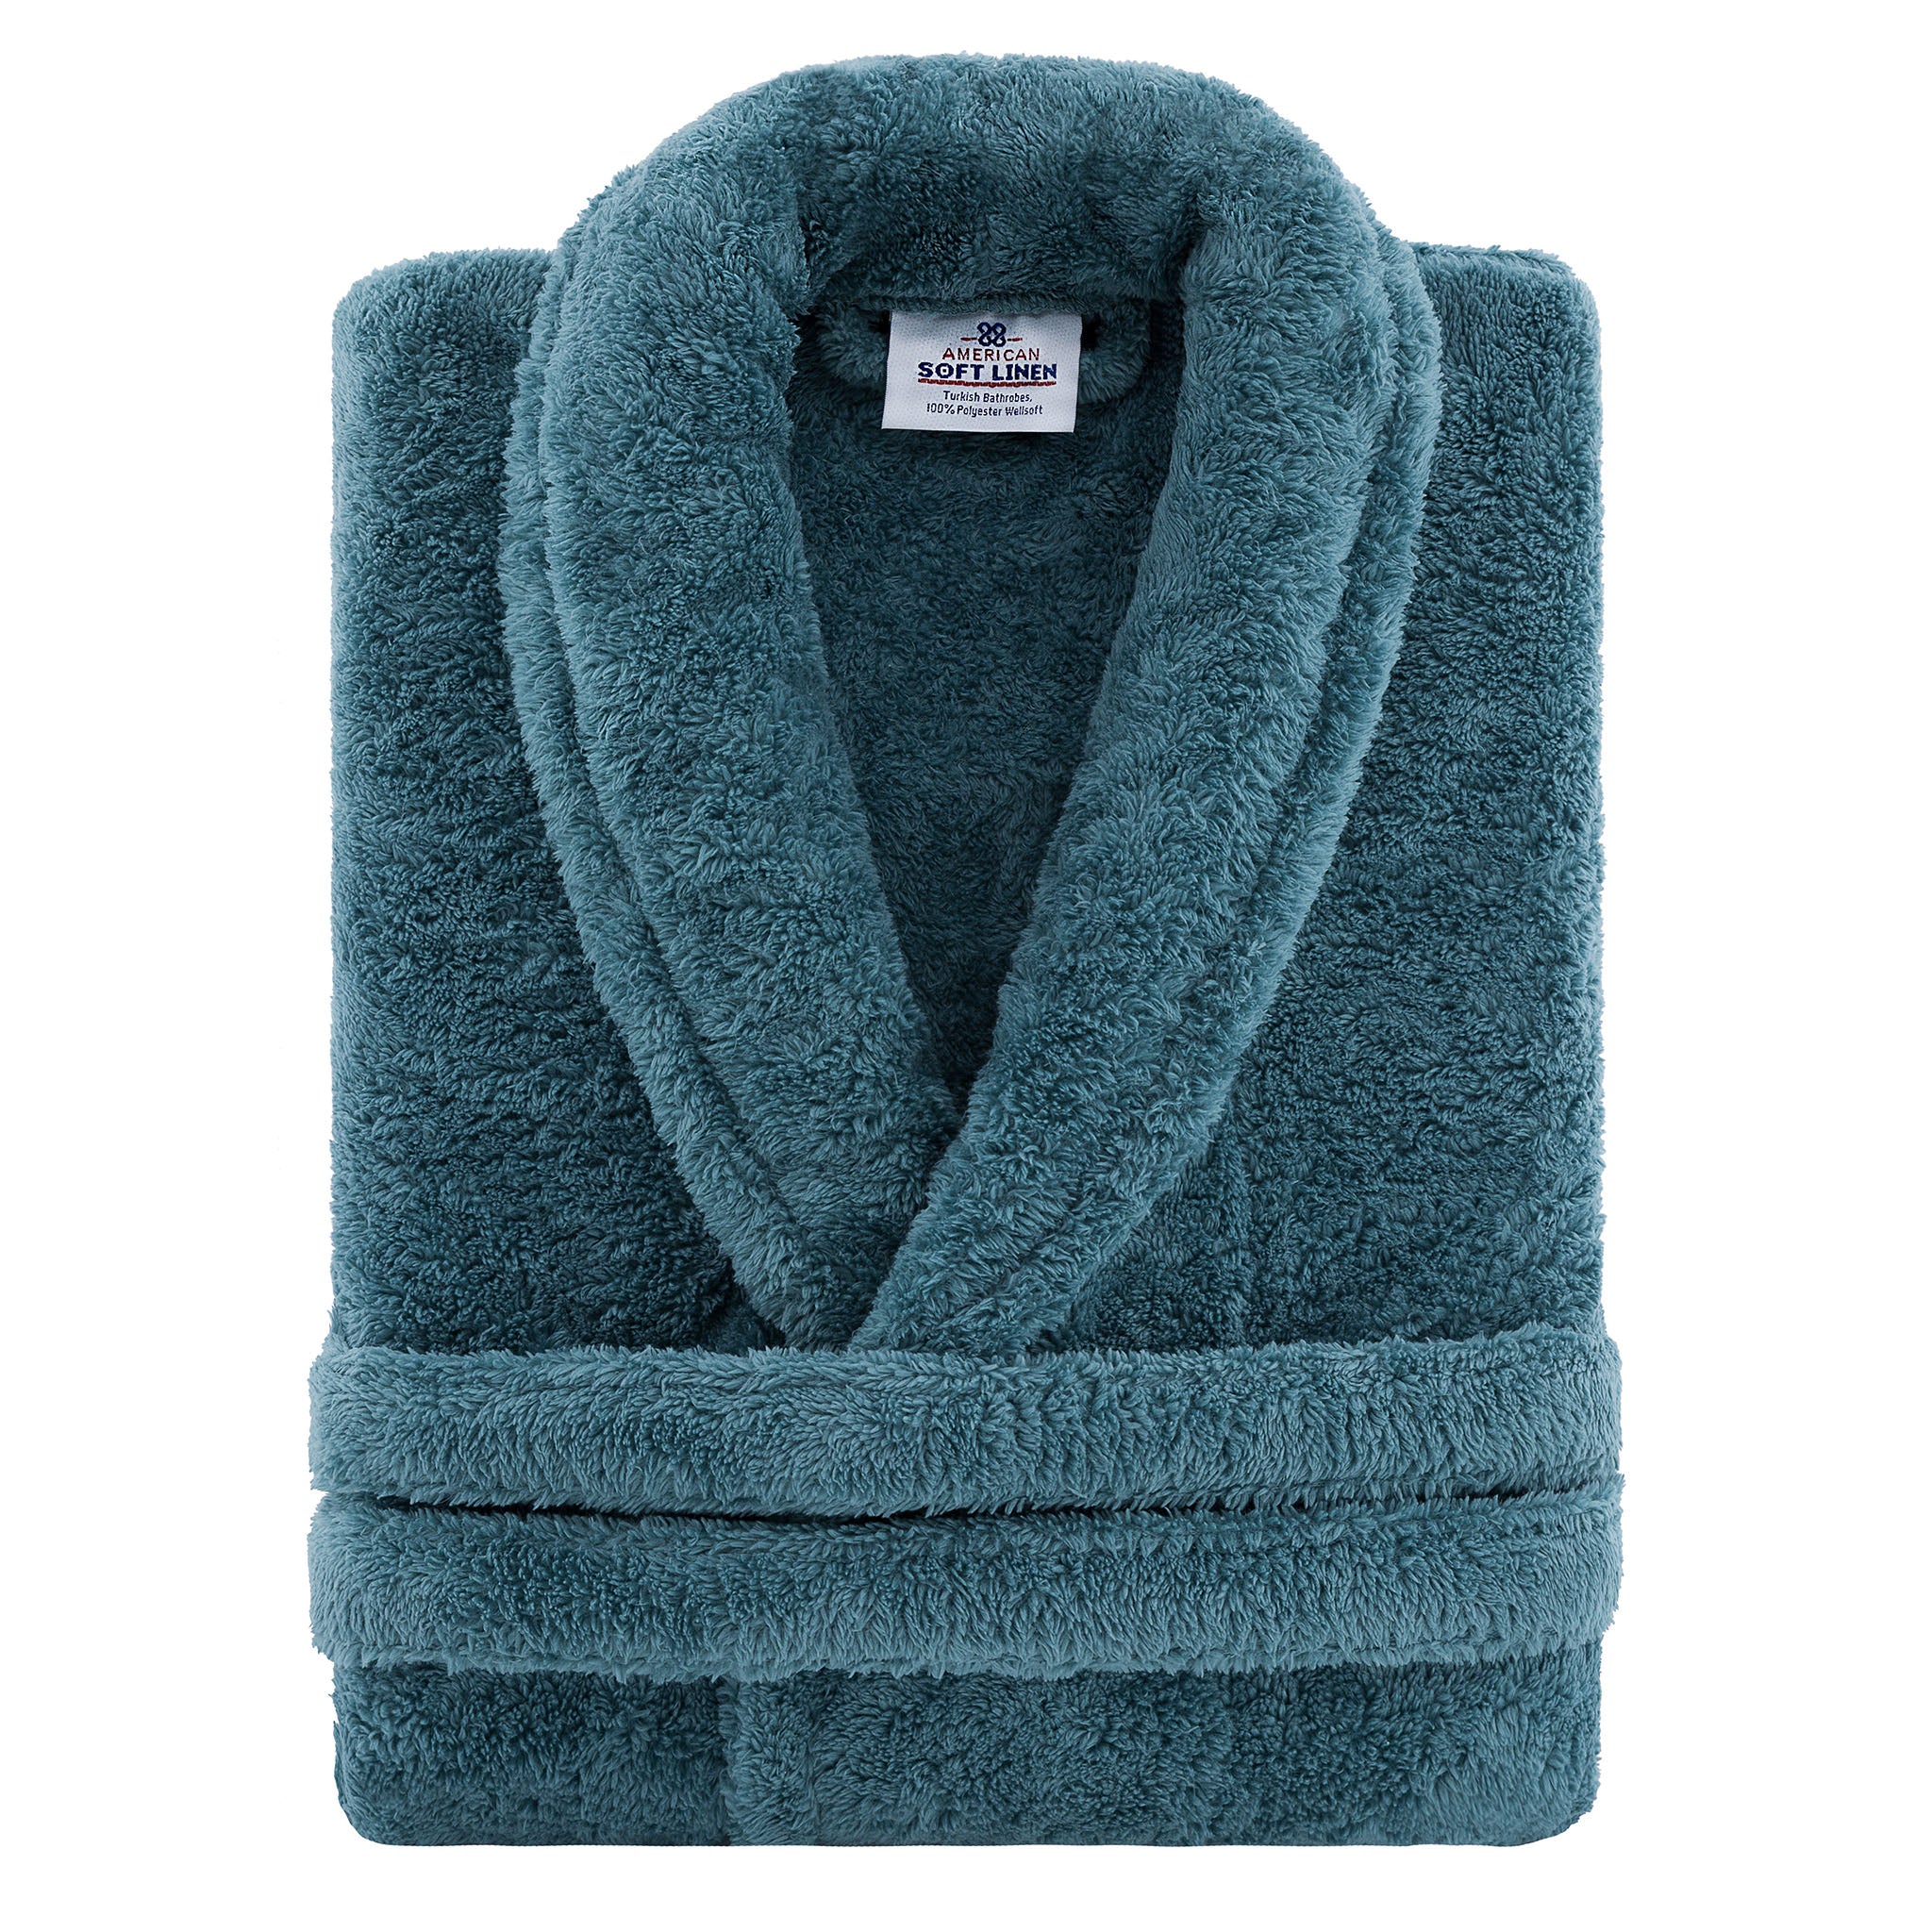 American Soft Linen Super Soft Absorbent and Fluffy Unisex Fleece Bathrobe -12 Set Case Pack -L-XL-colonial-blue-3